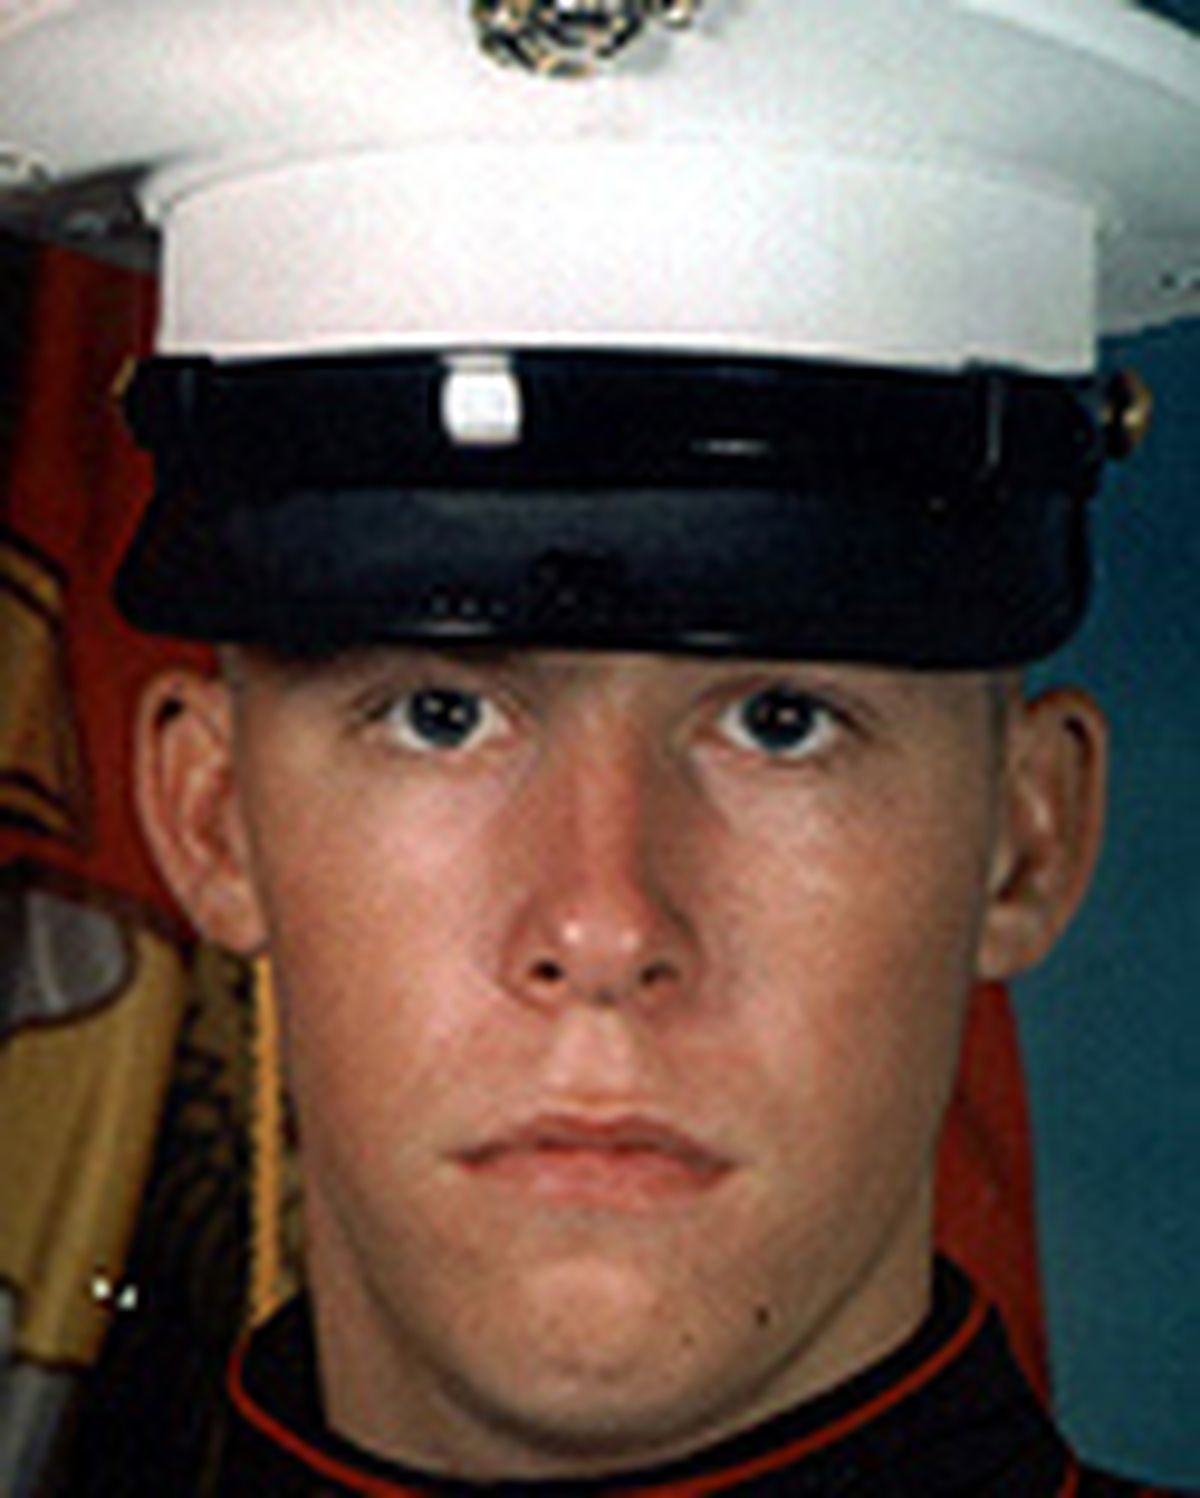 Pfc. Christopher John Reed, 20, Craigmont, Idaho, Marines.
Died: 2004
